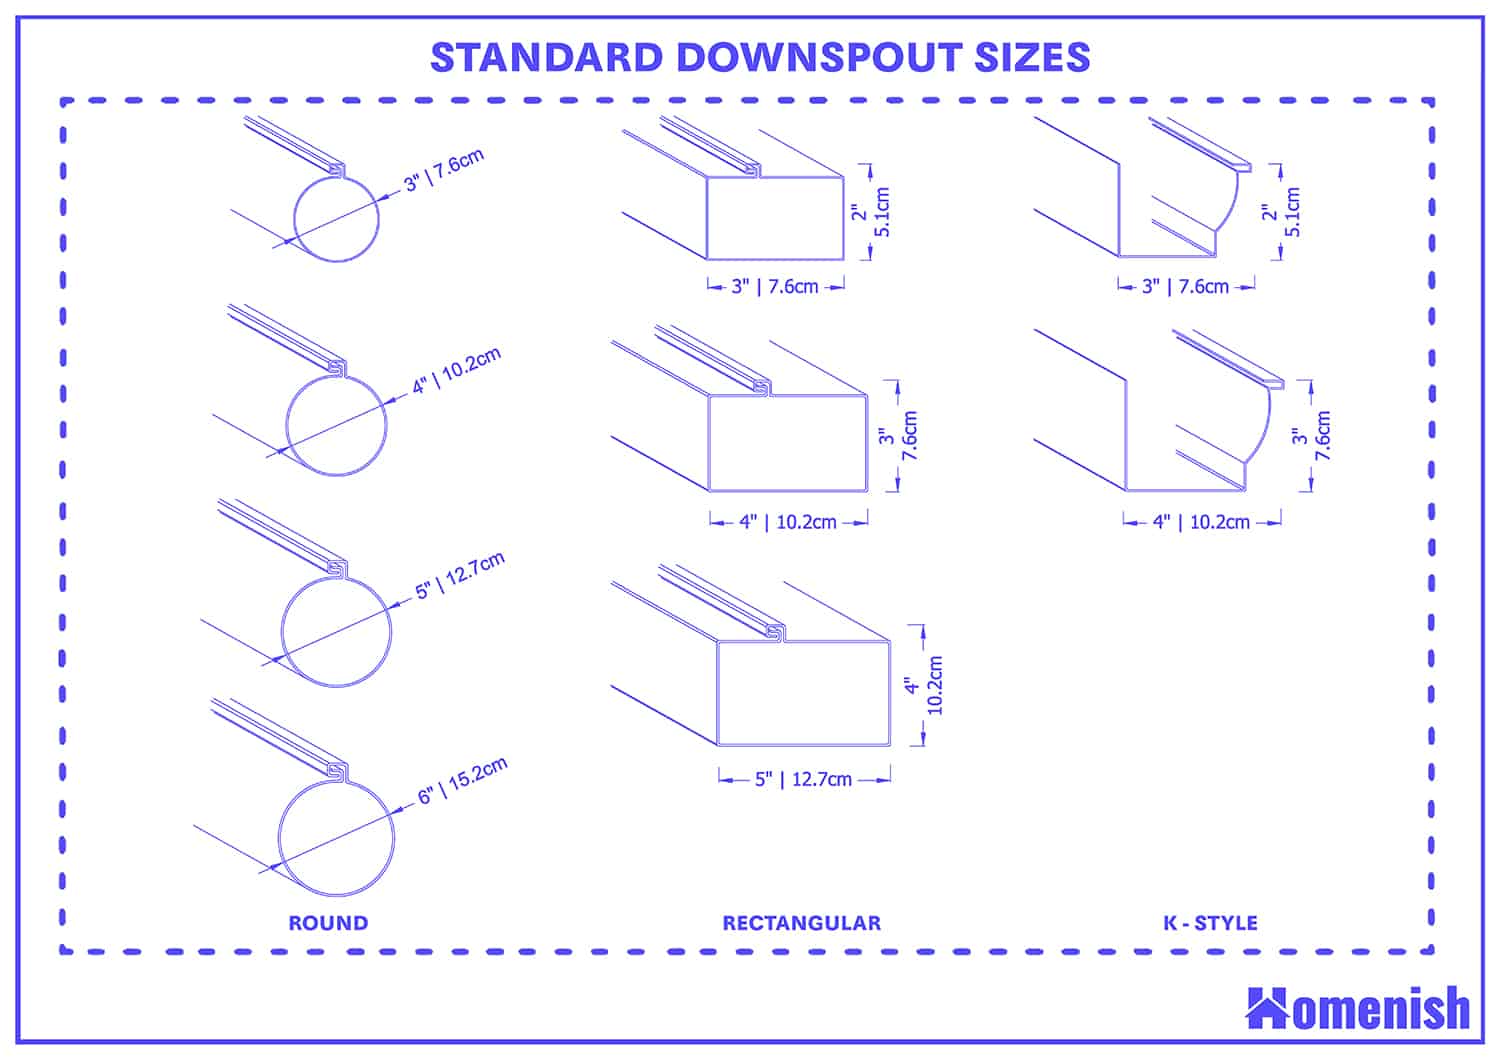 Standard downspout sizes